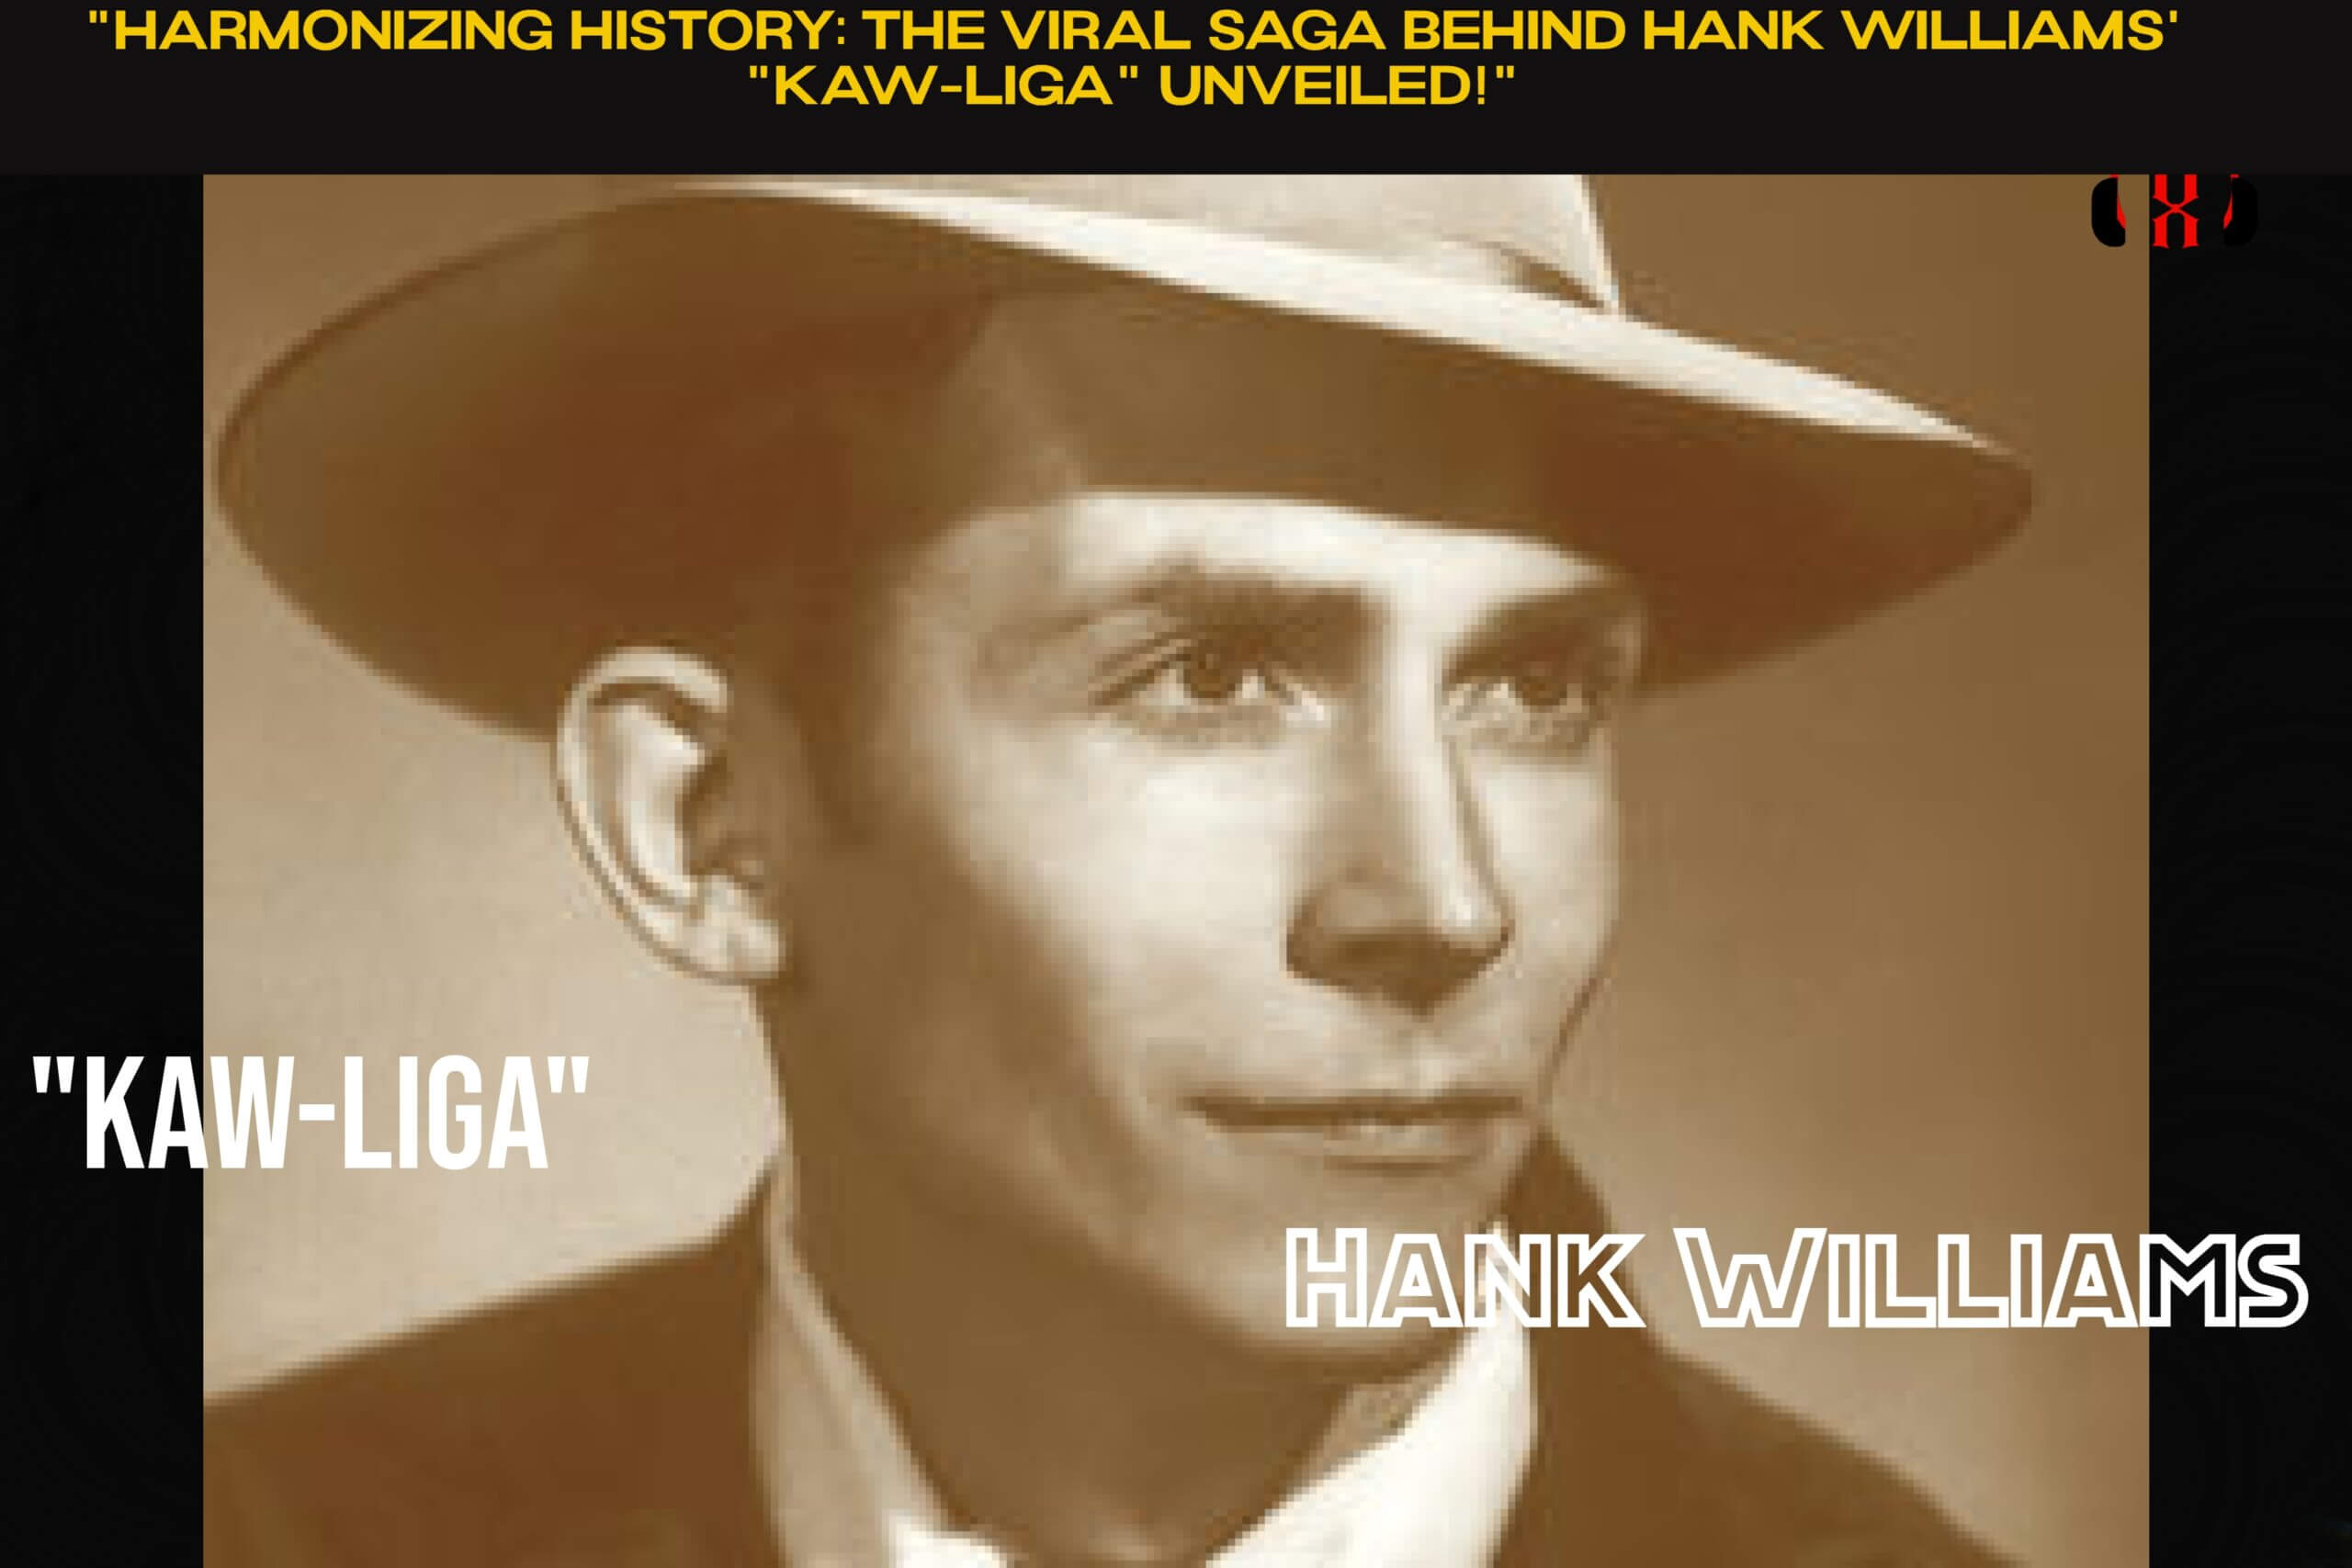 “Harmonizing History: The Viral Saga Behind Hank Williams’ “Kaw-Liga” Unveiled!”